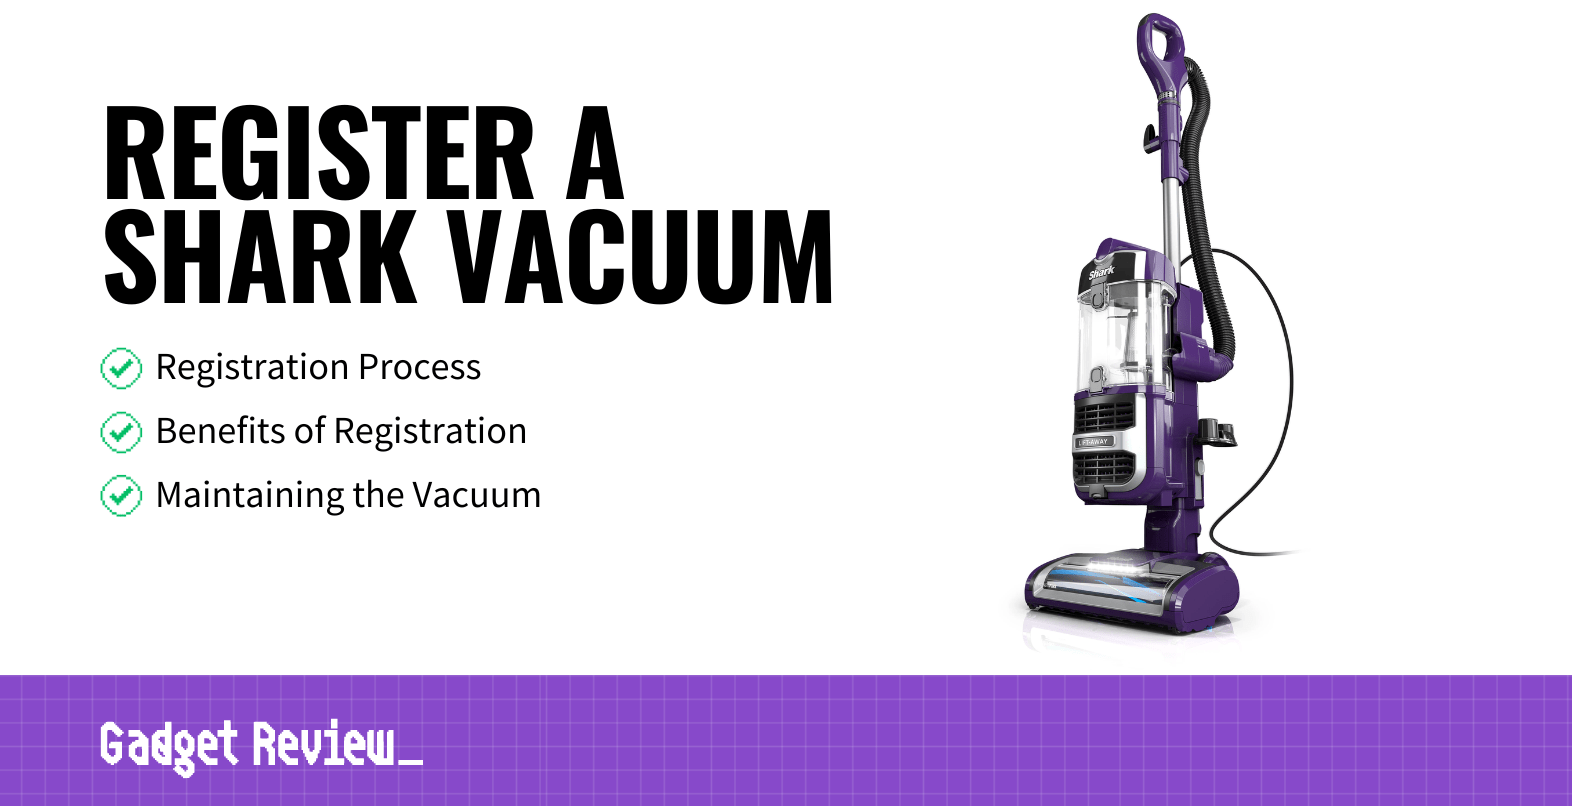 How to Register a Shark Vacuum